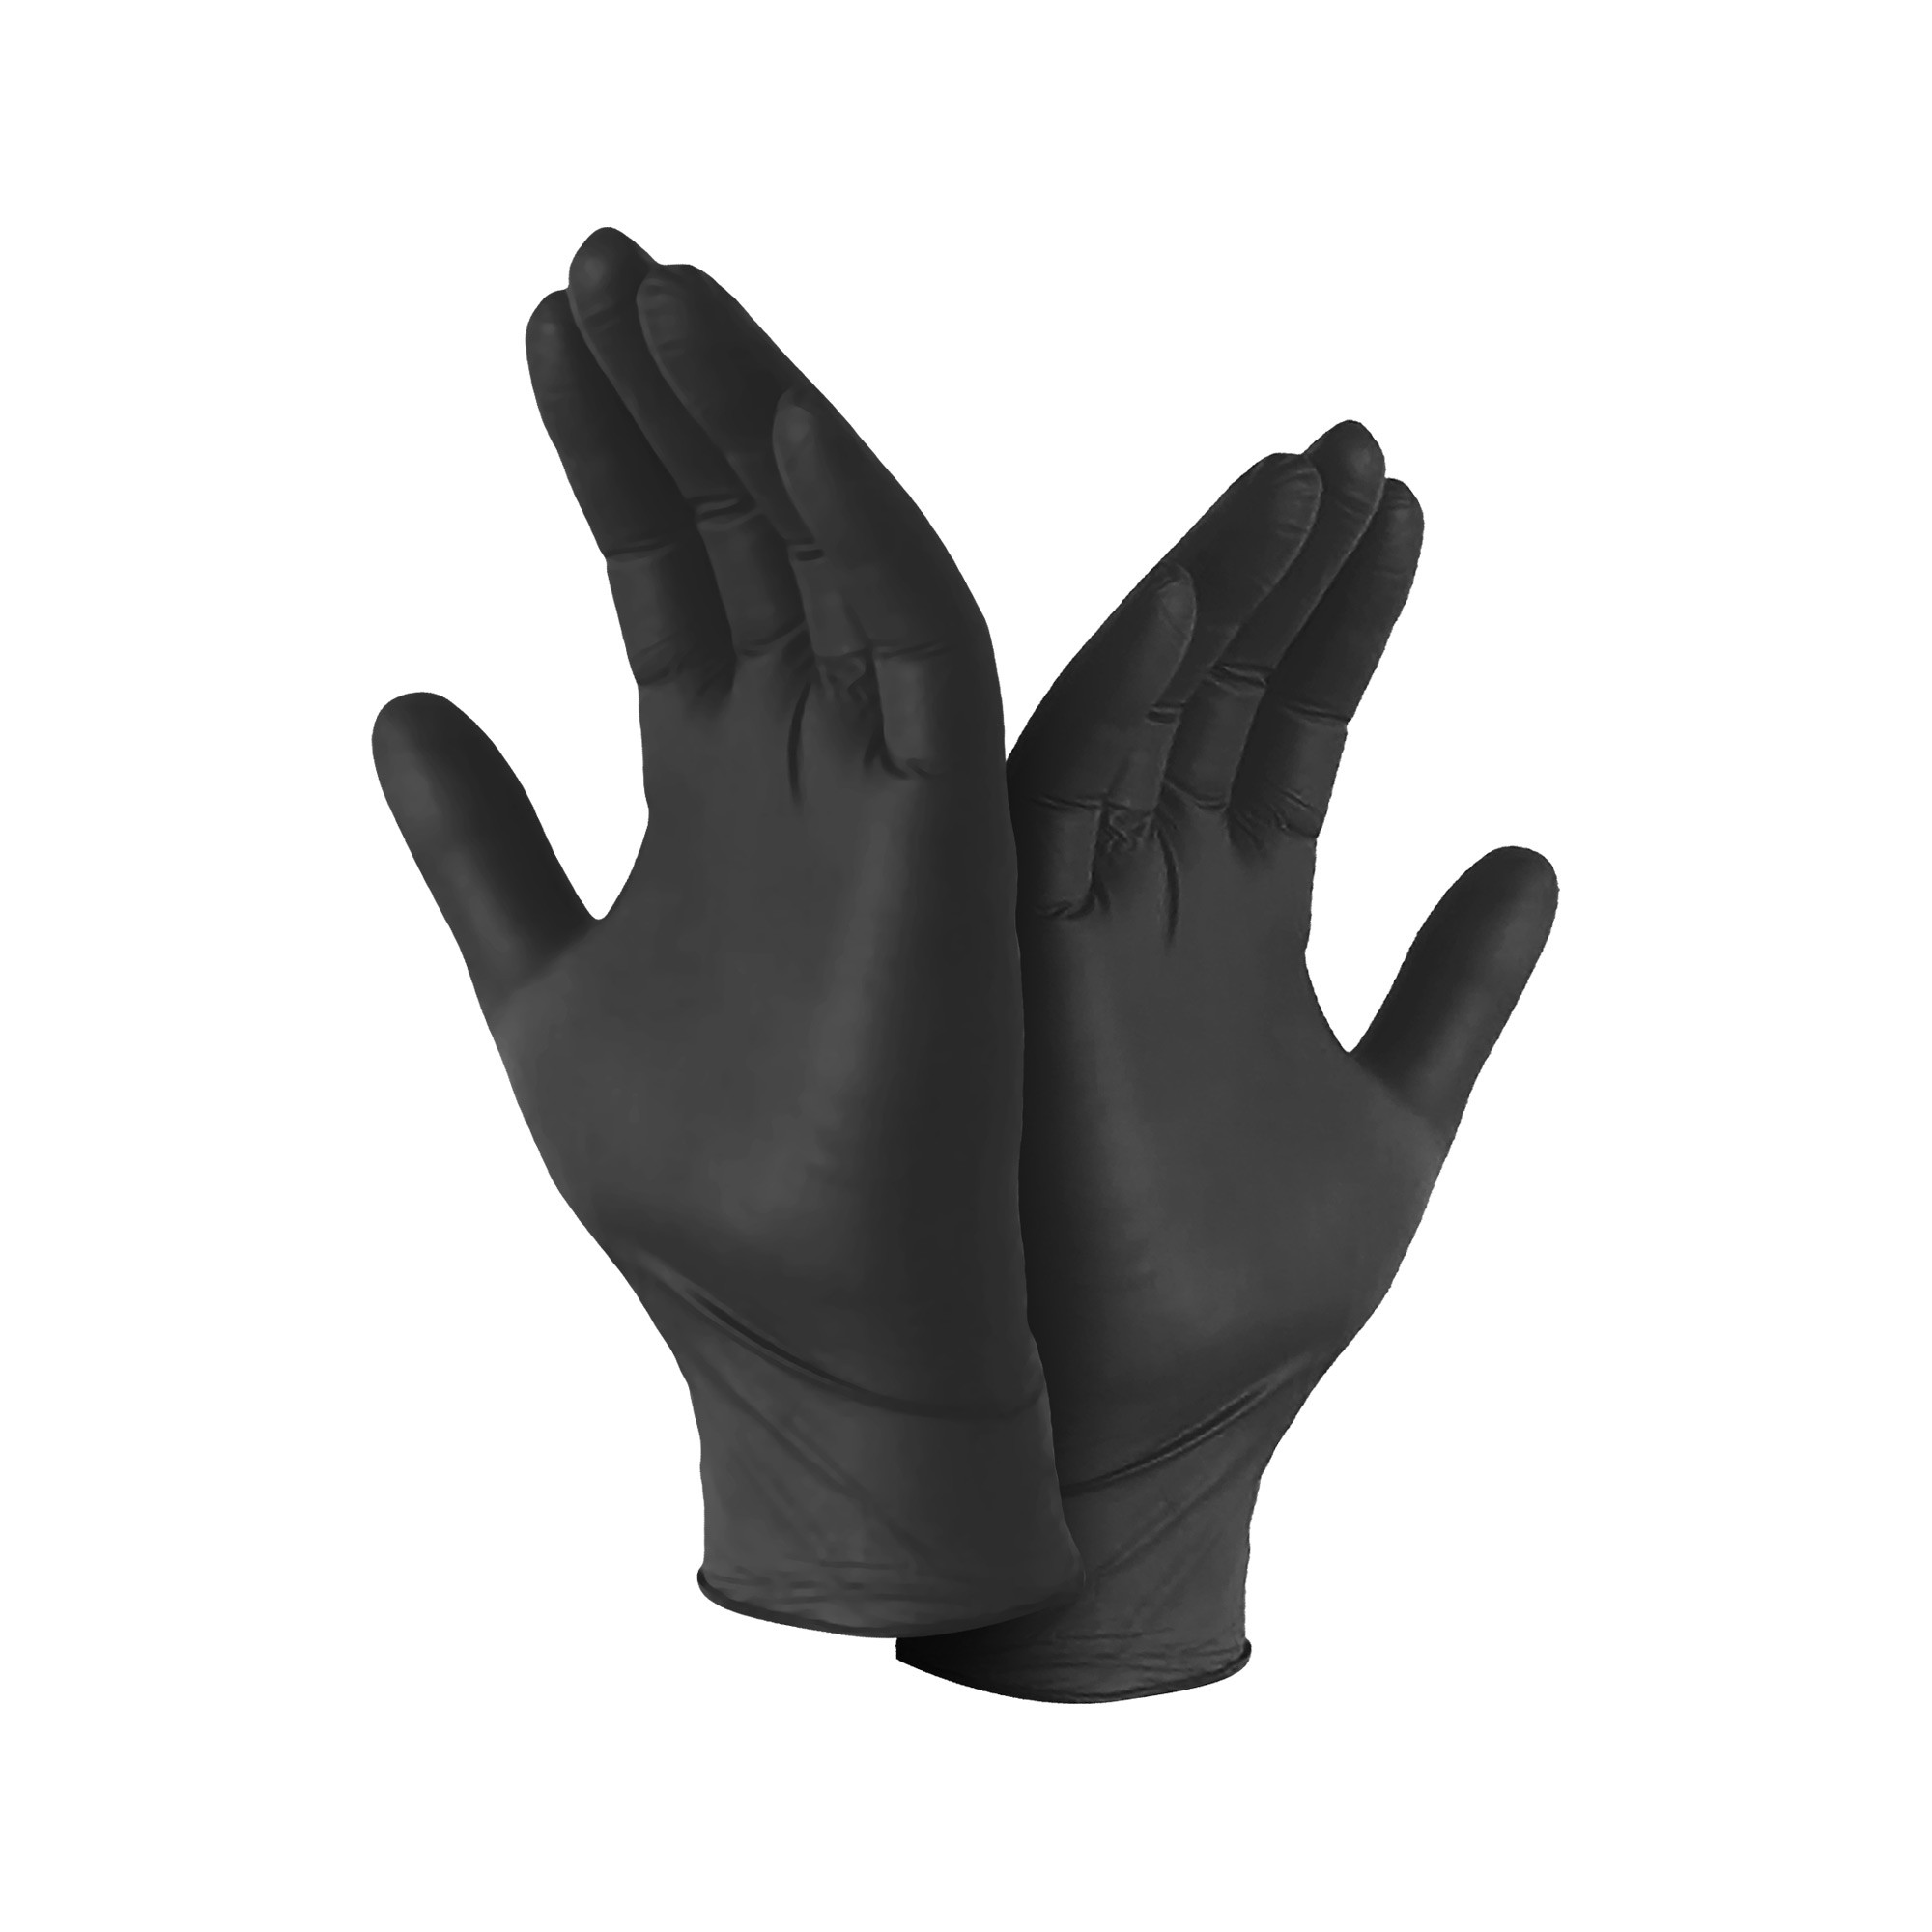 ResQ-Grip Drug Resistant Gloves - Black